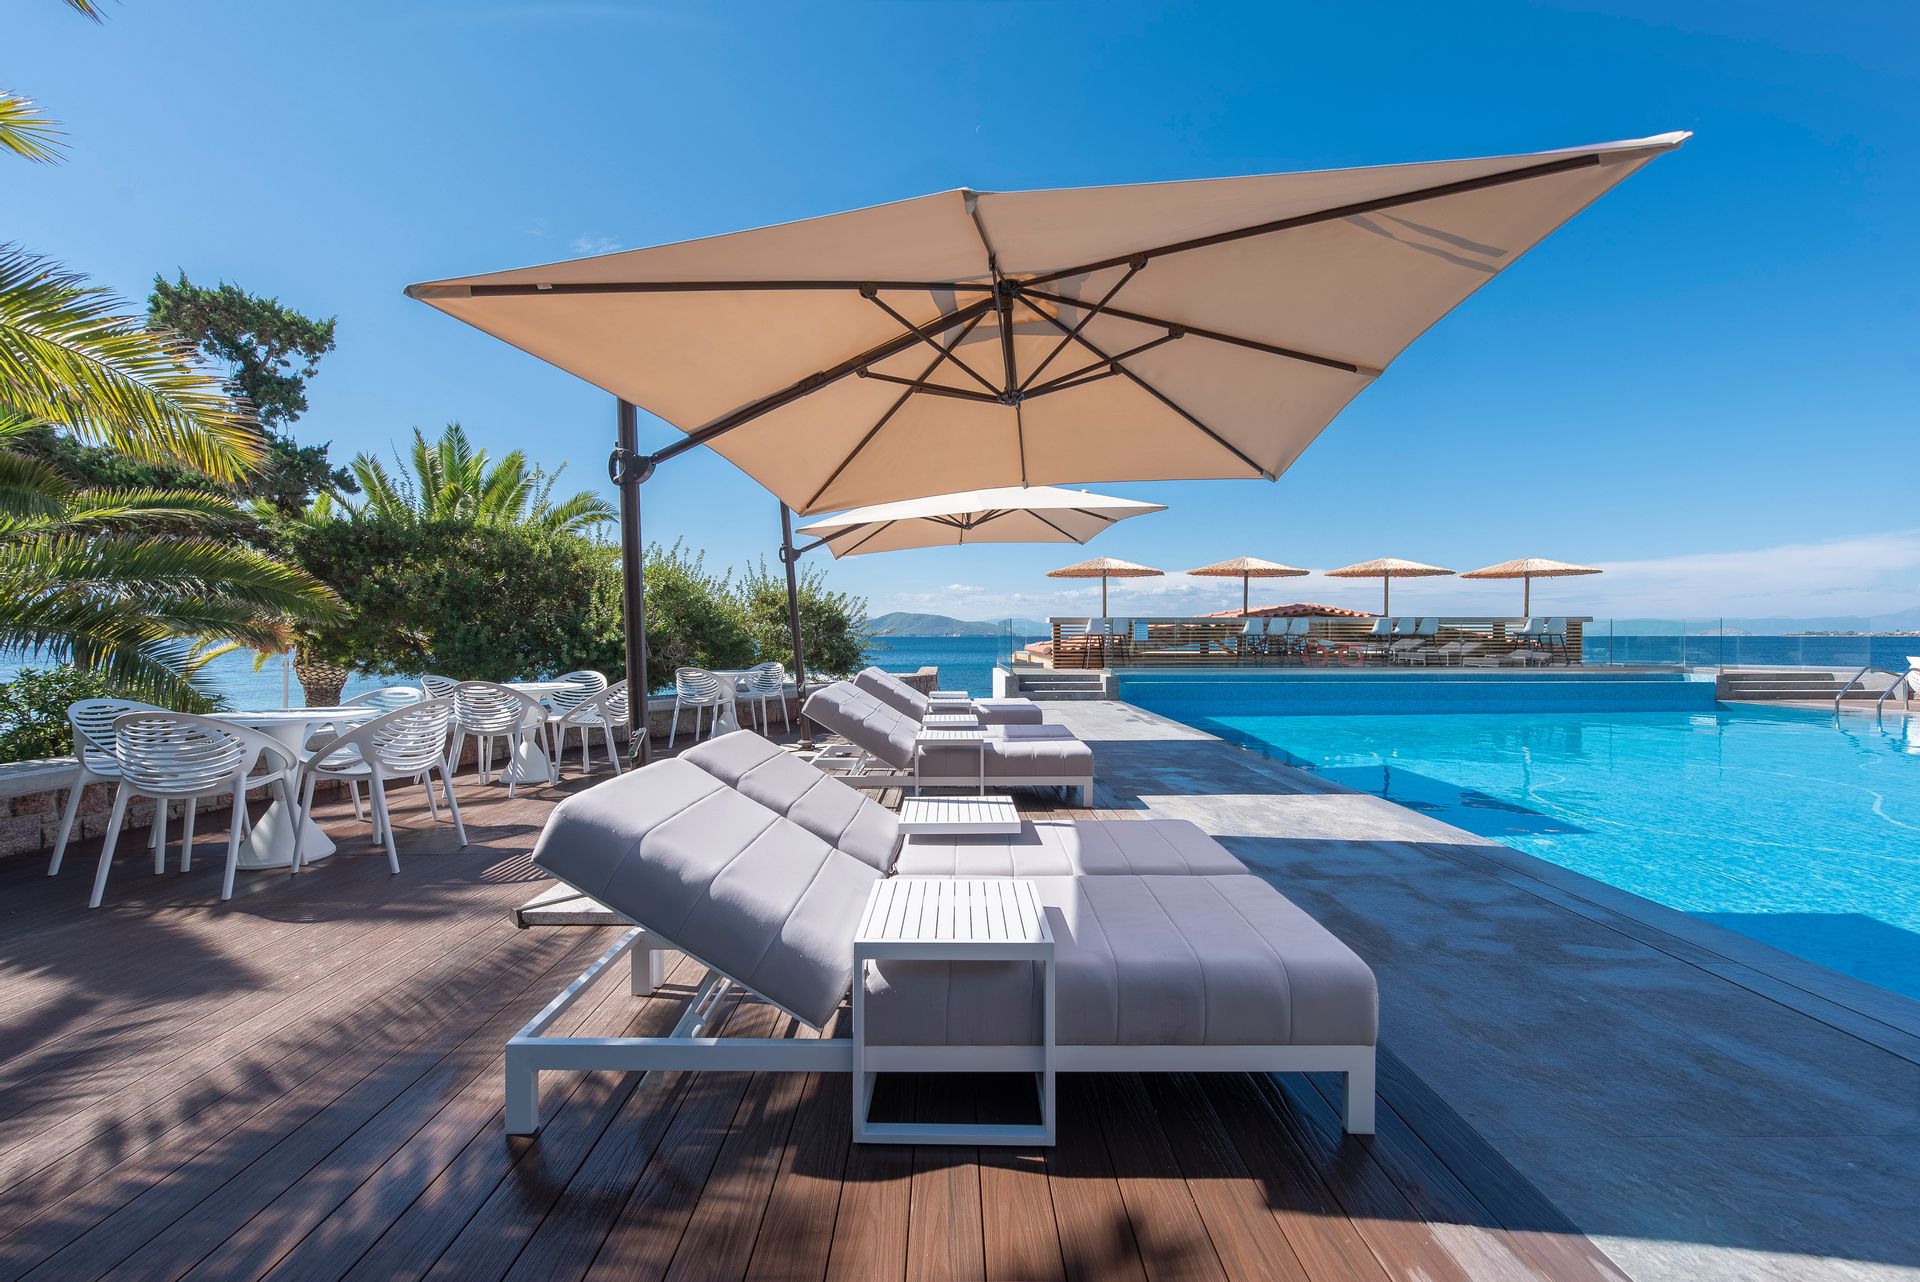 LaliBay Resort & Spa Aegina - Αίγινα ✦ 3 Ημέρες